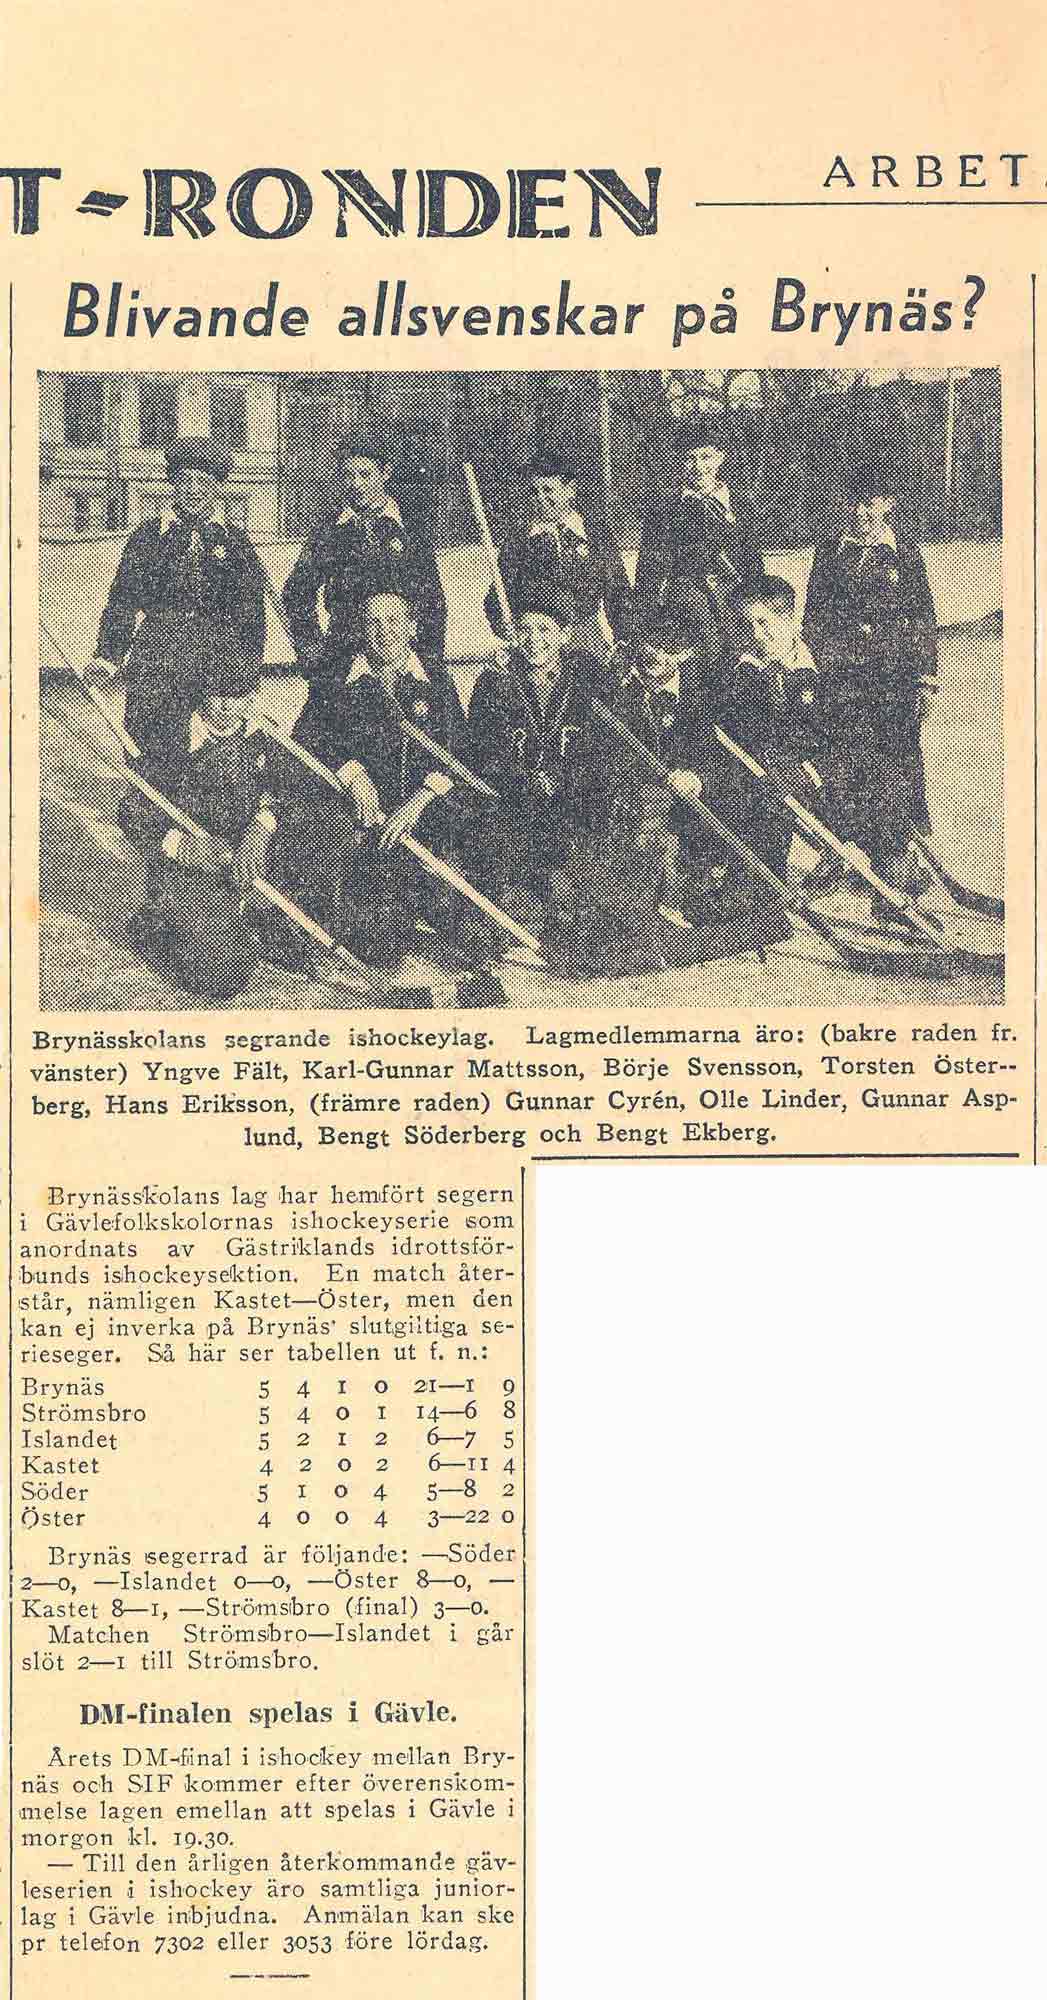 Brynässkolans ishockeylag, Arbetarbladet 1945